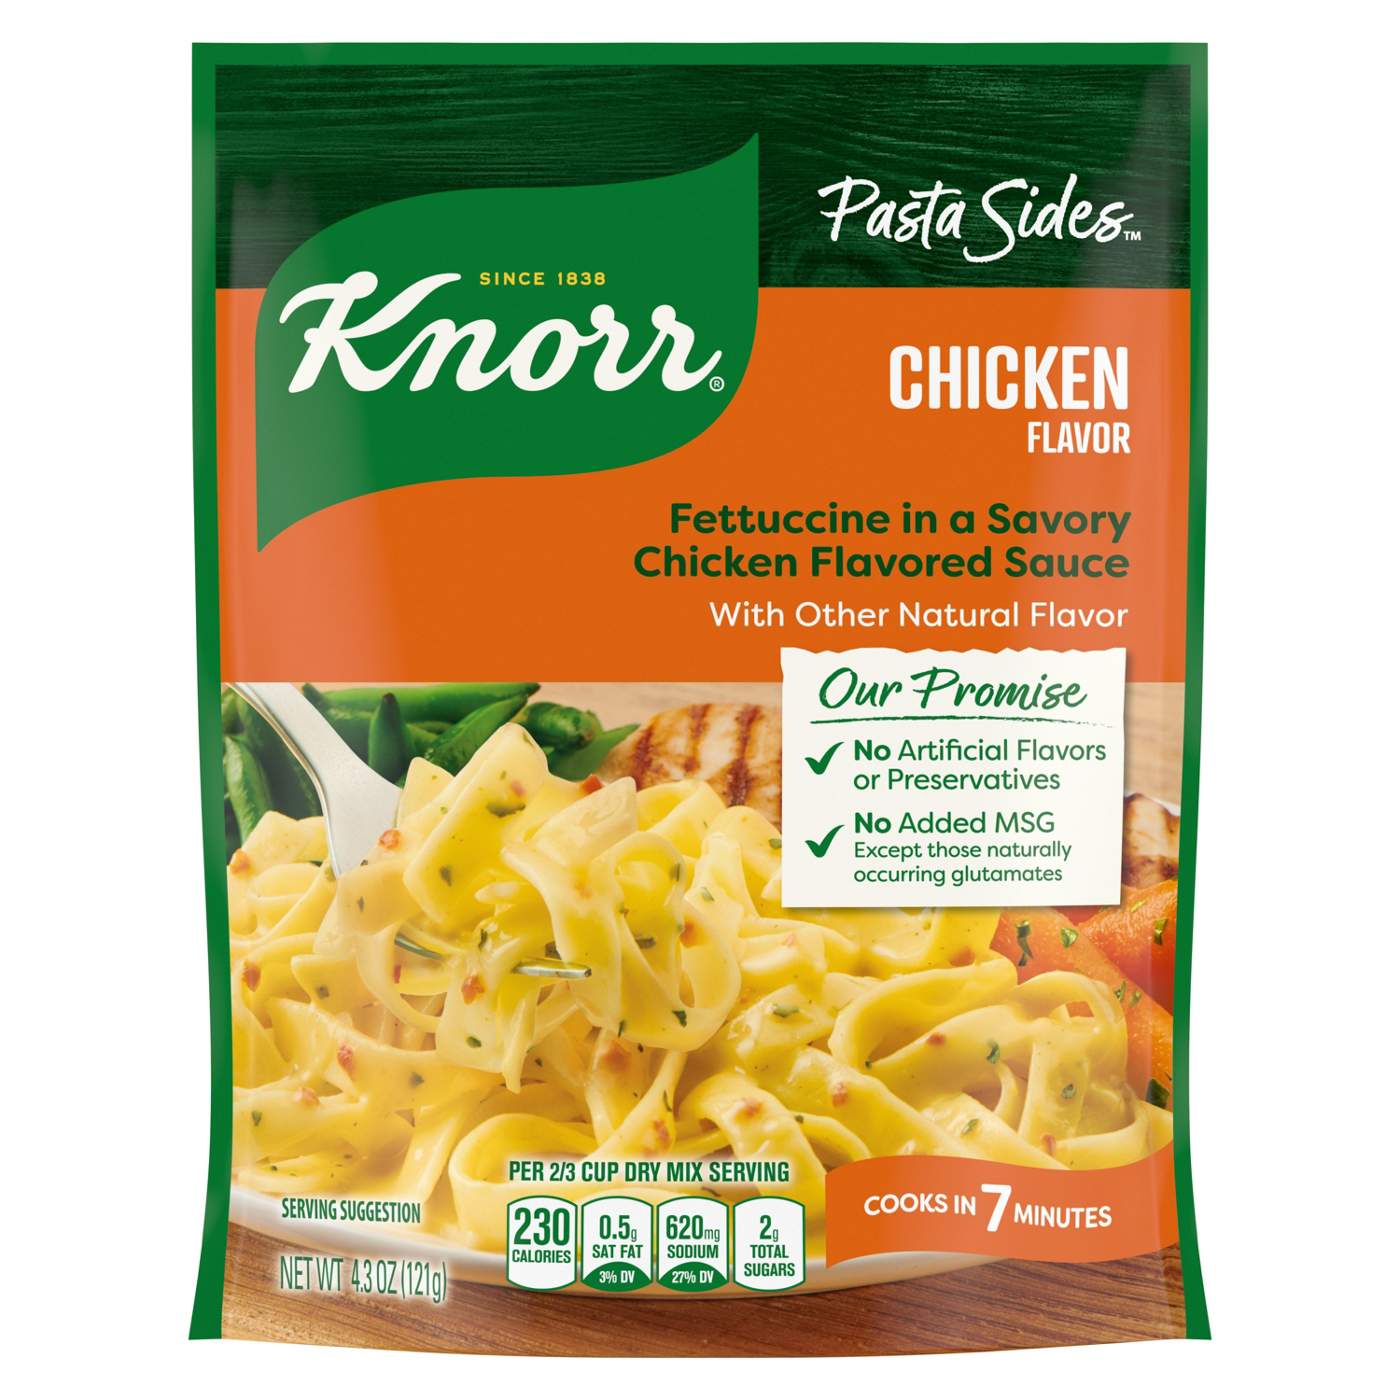 Knorr Pasta Sides Chicken Flavor; image 1 of 8